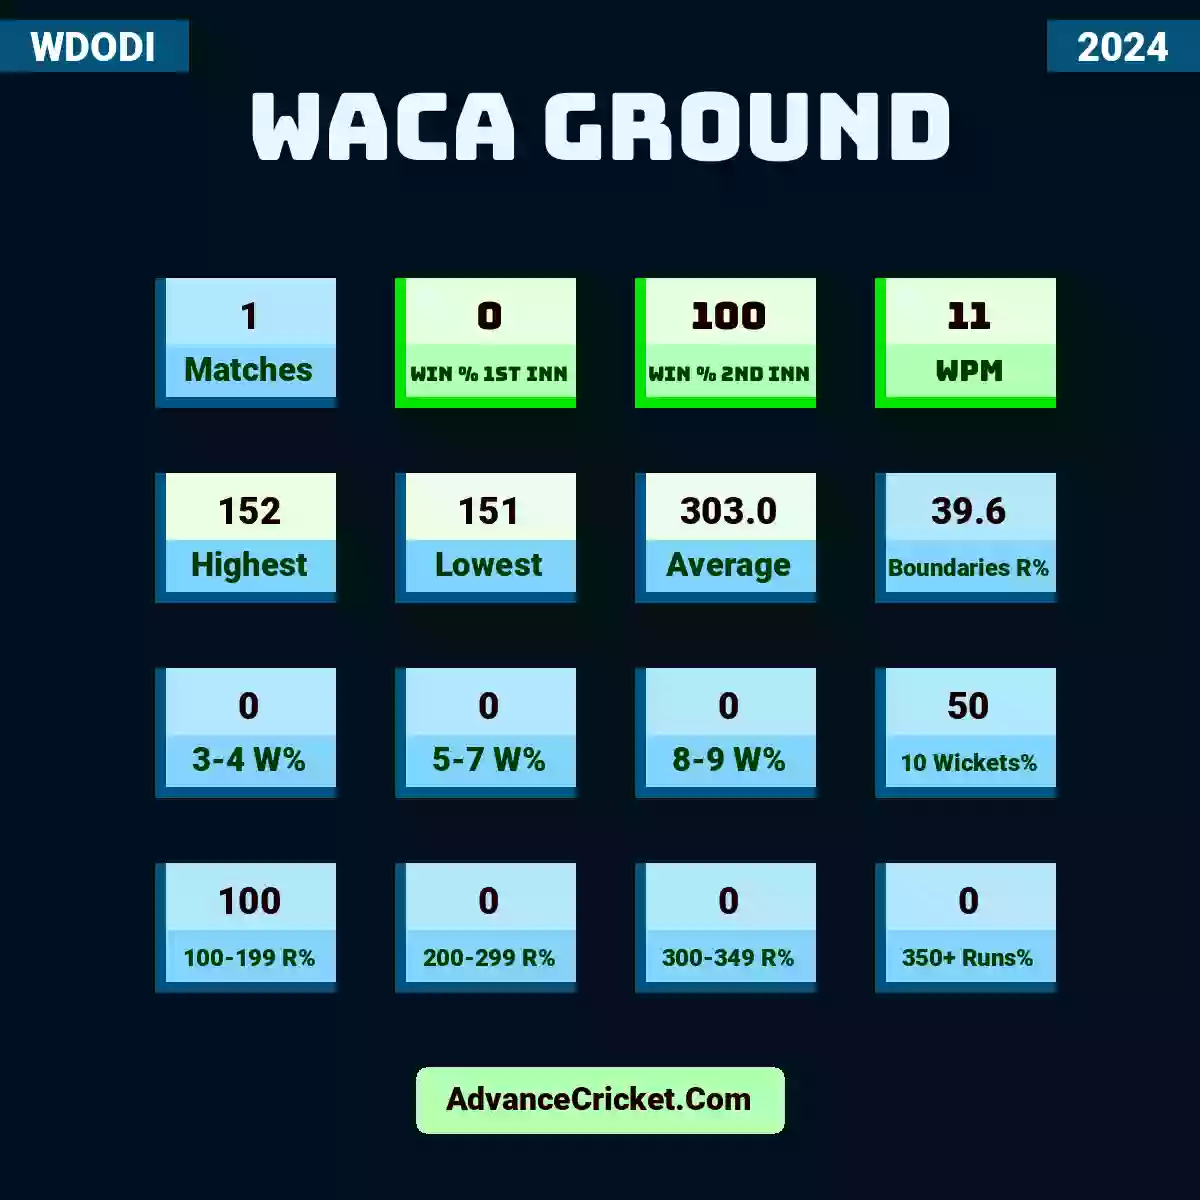 Image showing WACA Ground with Matches: 1, Win % 1st Inn: 0, Win % 2nd Inn: 100, WPM: 11, Highest: 152, Lowest: 151, Average: 303.0, Boundaries R%: 39.6, 3-4 W%: 0, 5-7 W%: 0, 8-9 W%: 0, 10 Wickets%: 50, 100-199 R%: 100, 200-299 R%: 0, 300-349 R%: 0, 350+ Runs%: 0.